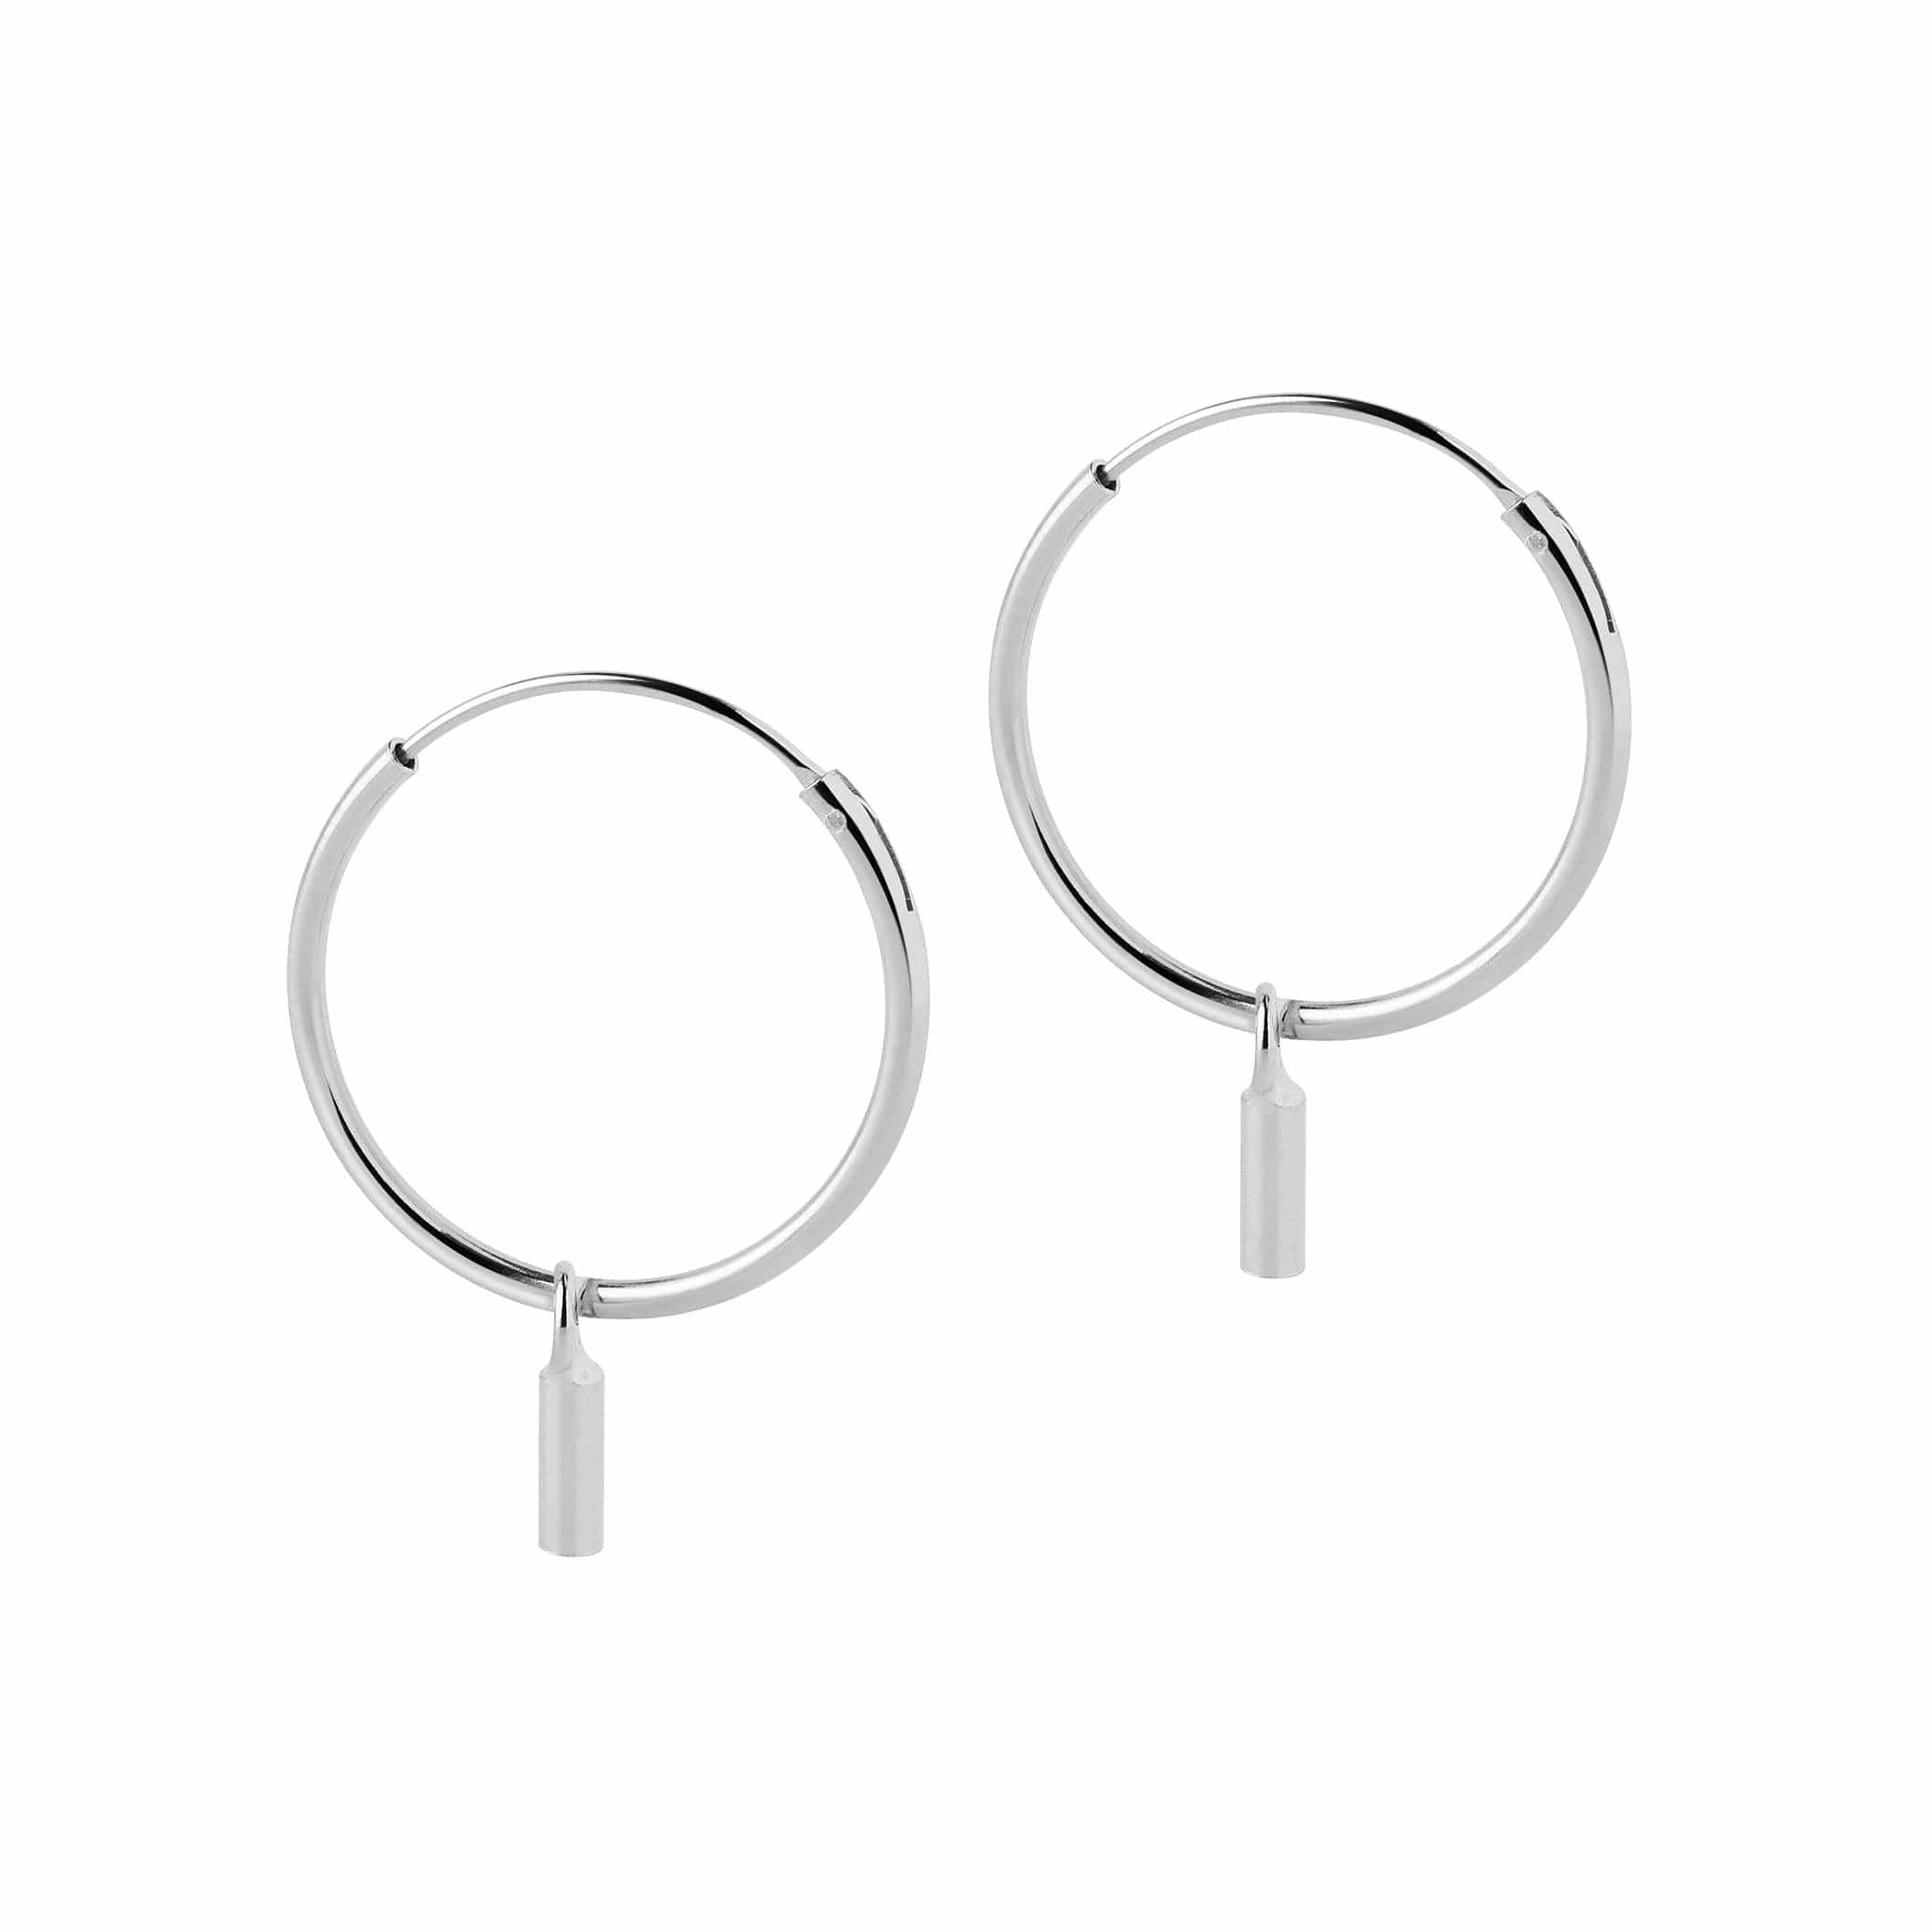 Hoop earrings silver with a rod pendant 18mm